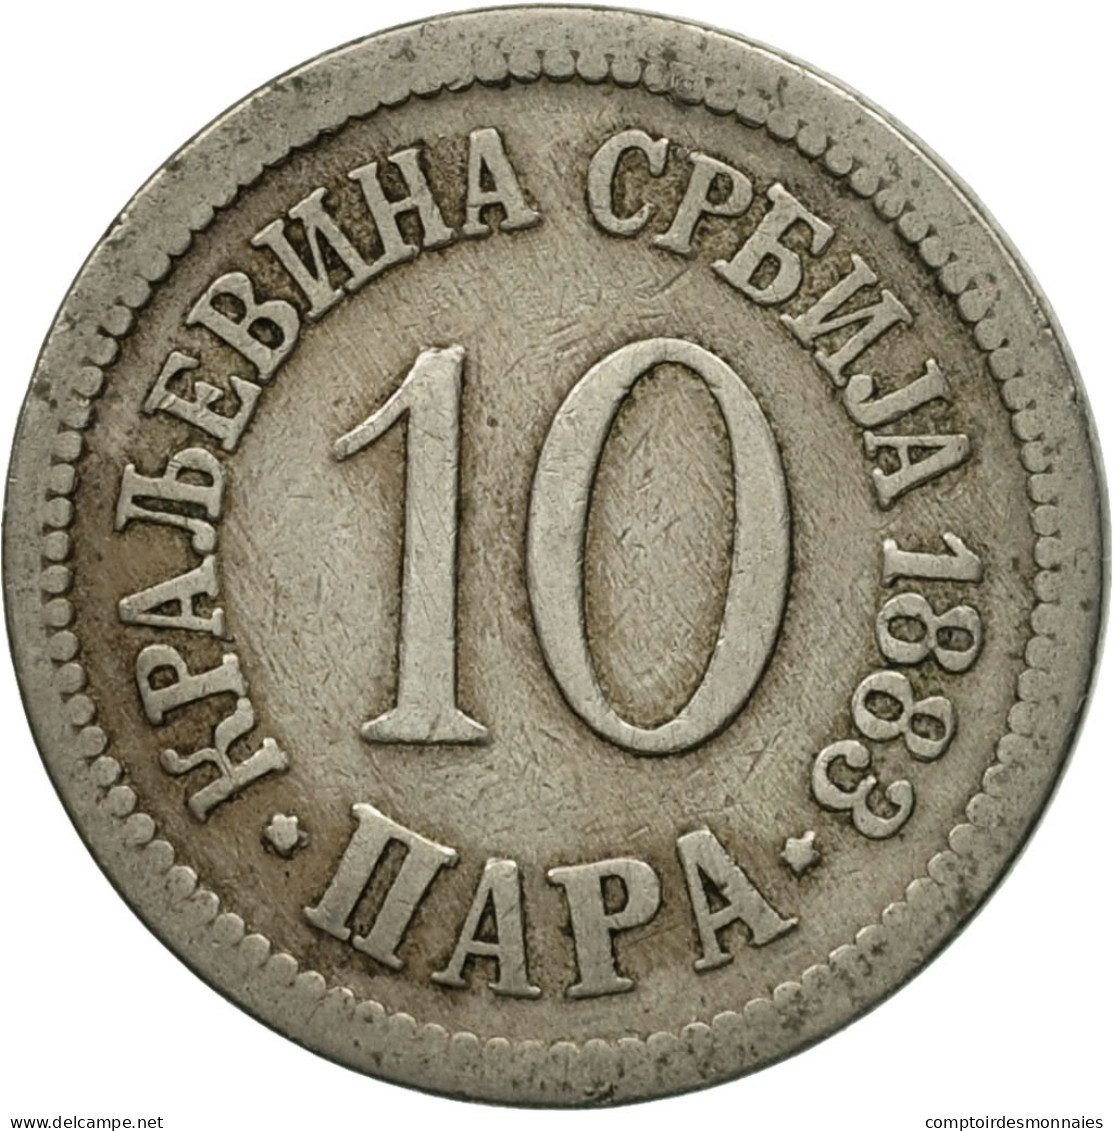 Monnaie, Serbie, Milan I, 10 Para, 1883, TB+, Copper-nickel, KM:19 - Serbia